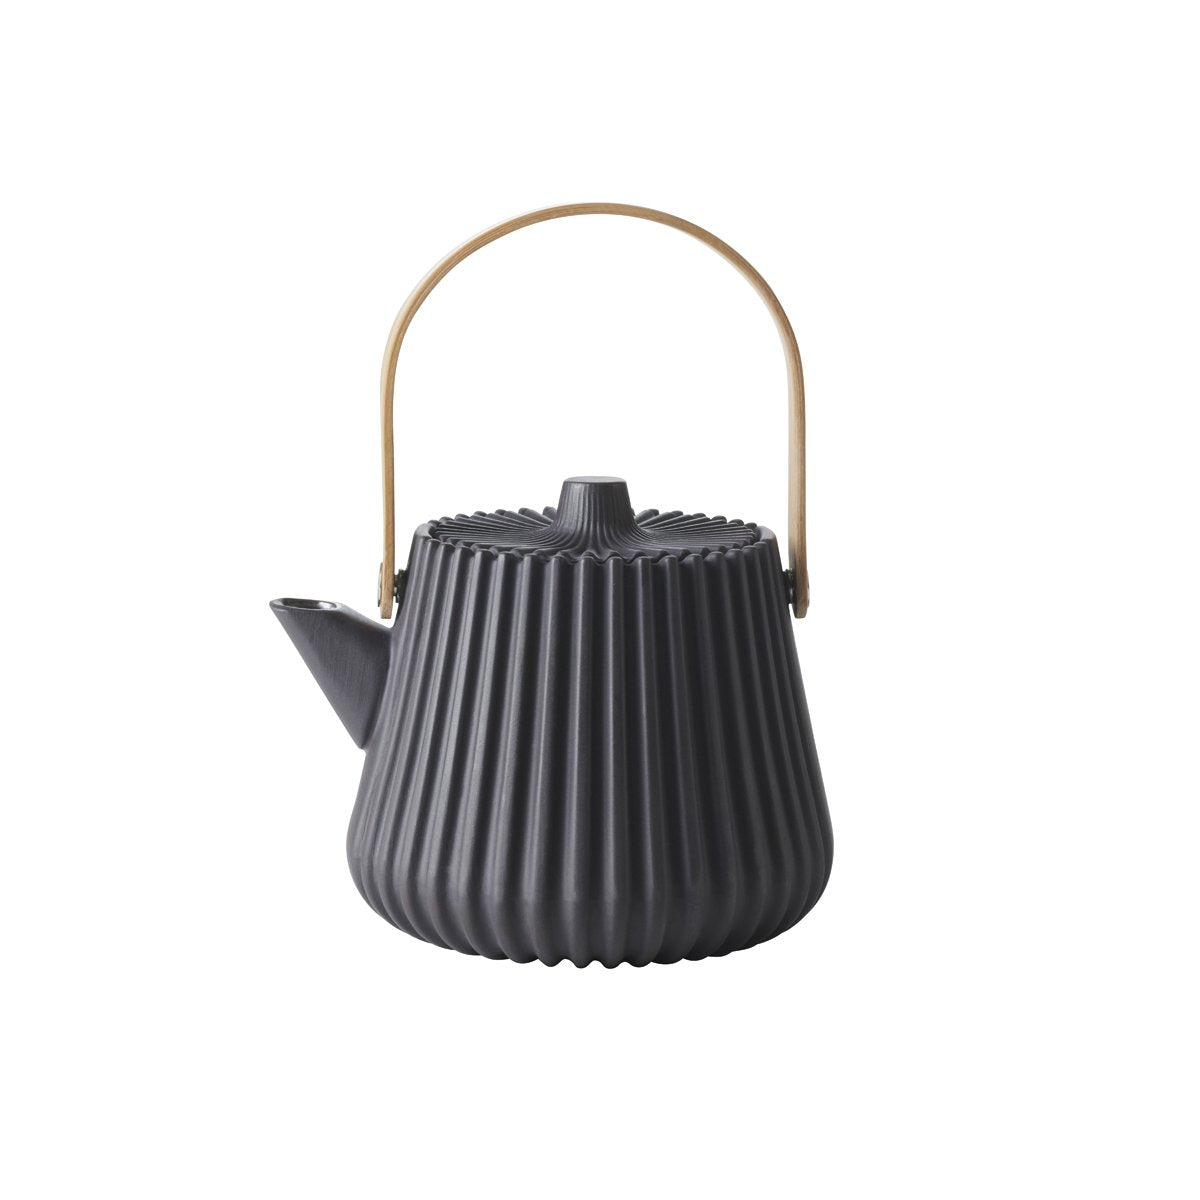 RV653593 Revol Pekoe Teapot With Infuser Basket 550ml Tomkin Australia Hospitality Supplies